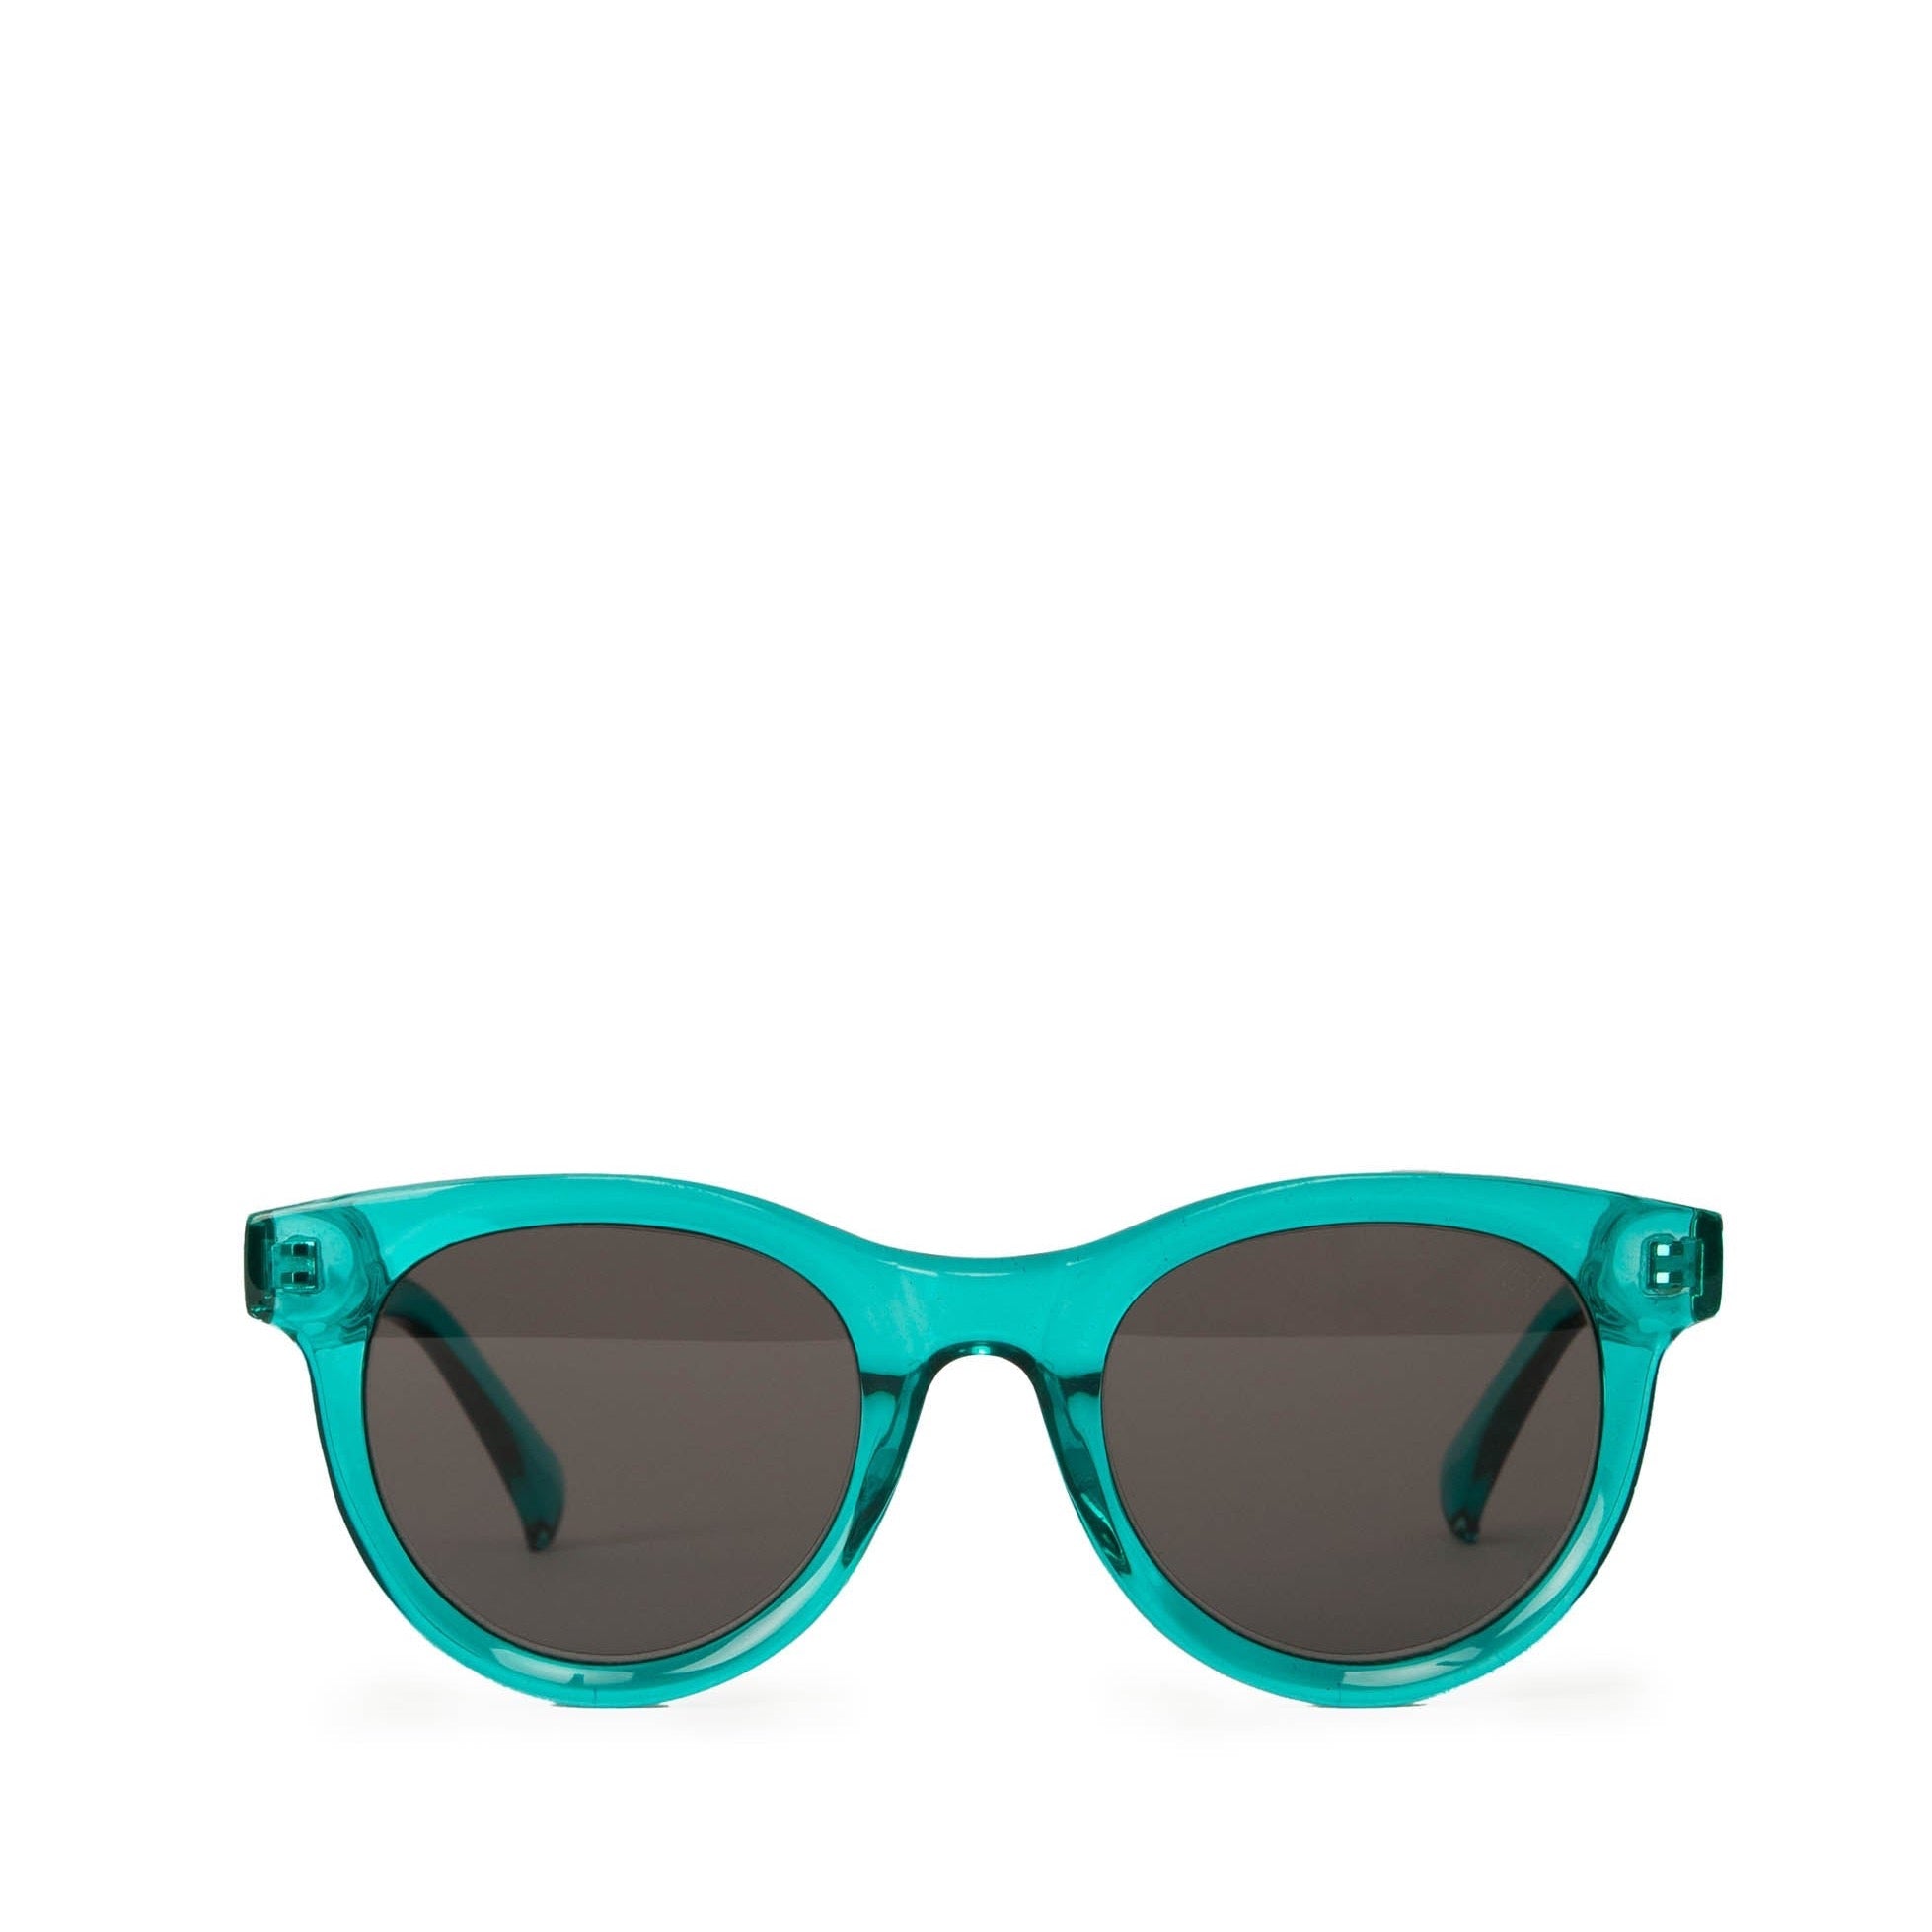 Matt & Nat - Jazi-2 Recycled Polarized Sunglasses Teal